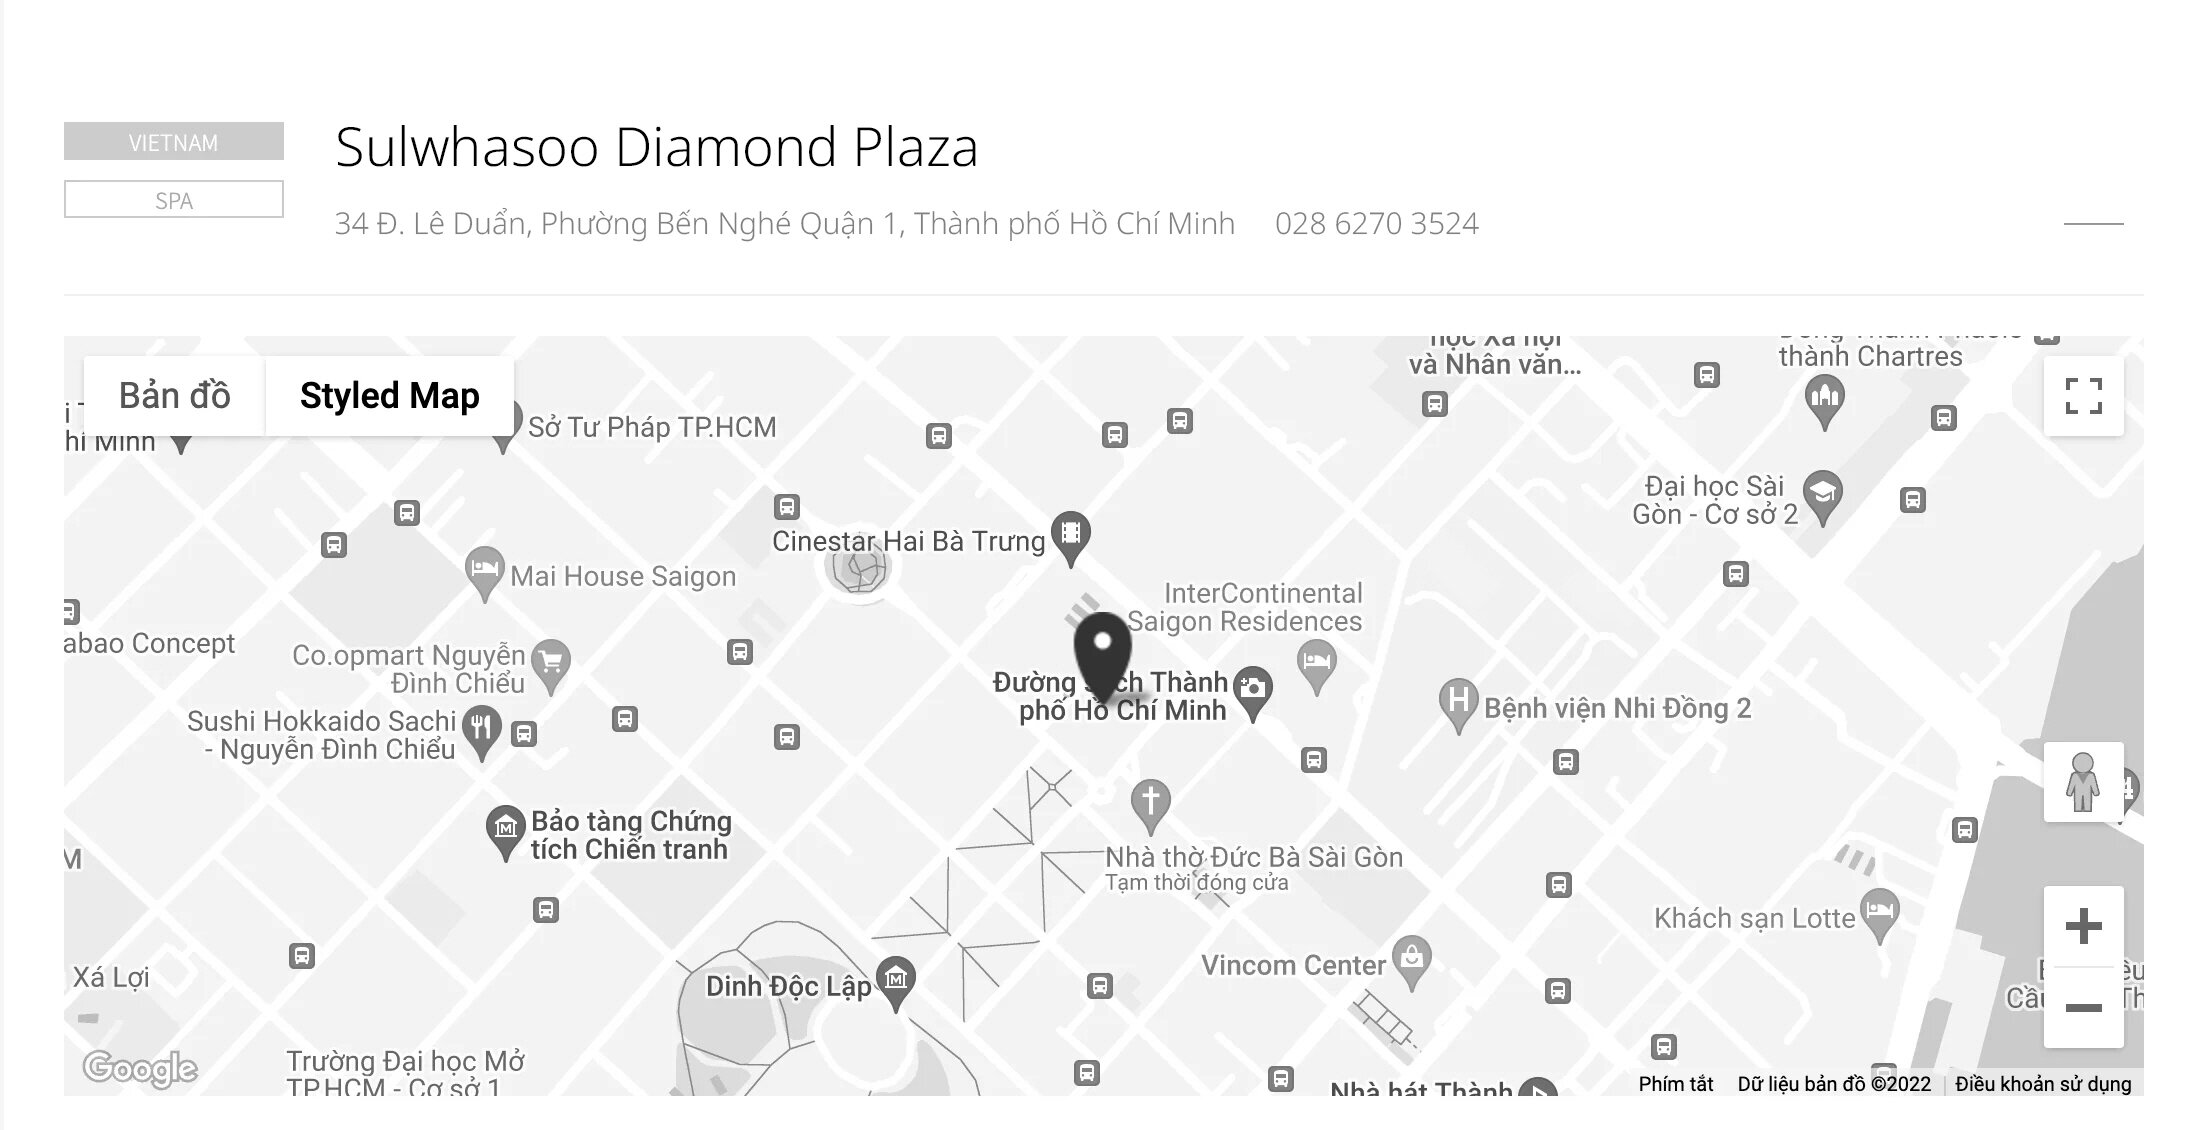 Sulwhasoo Diamond Plaza